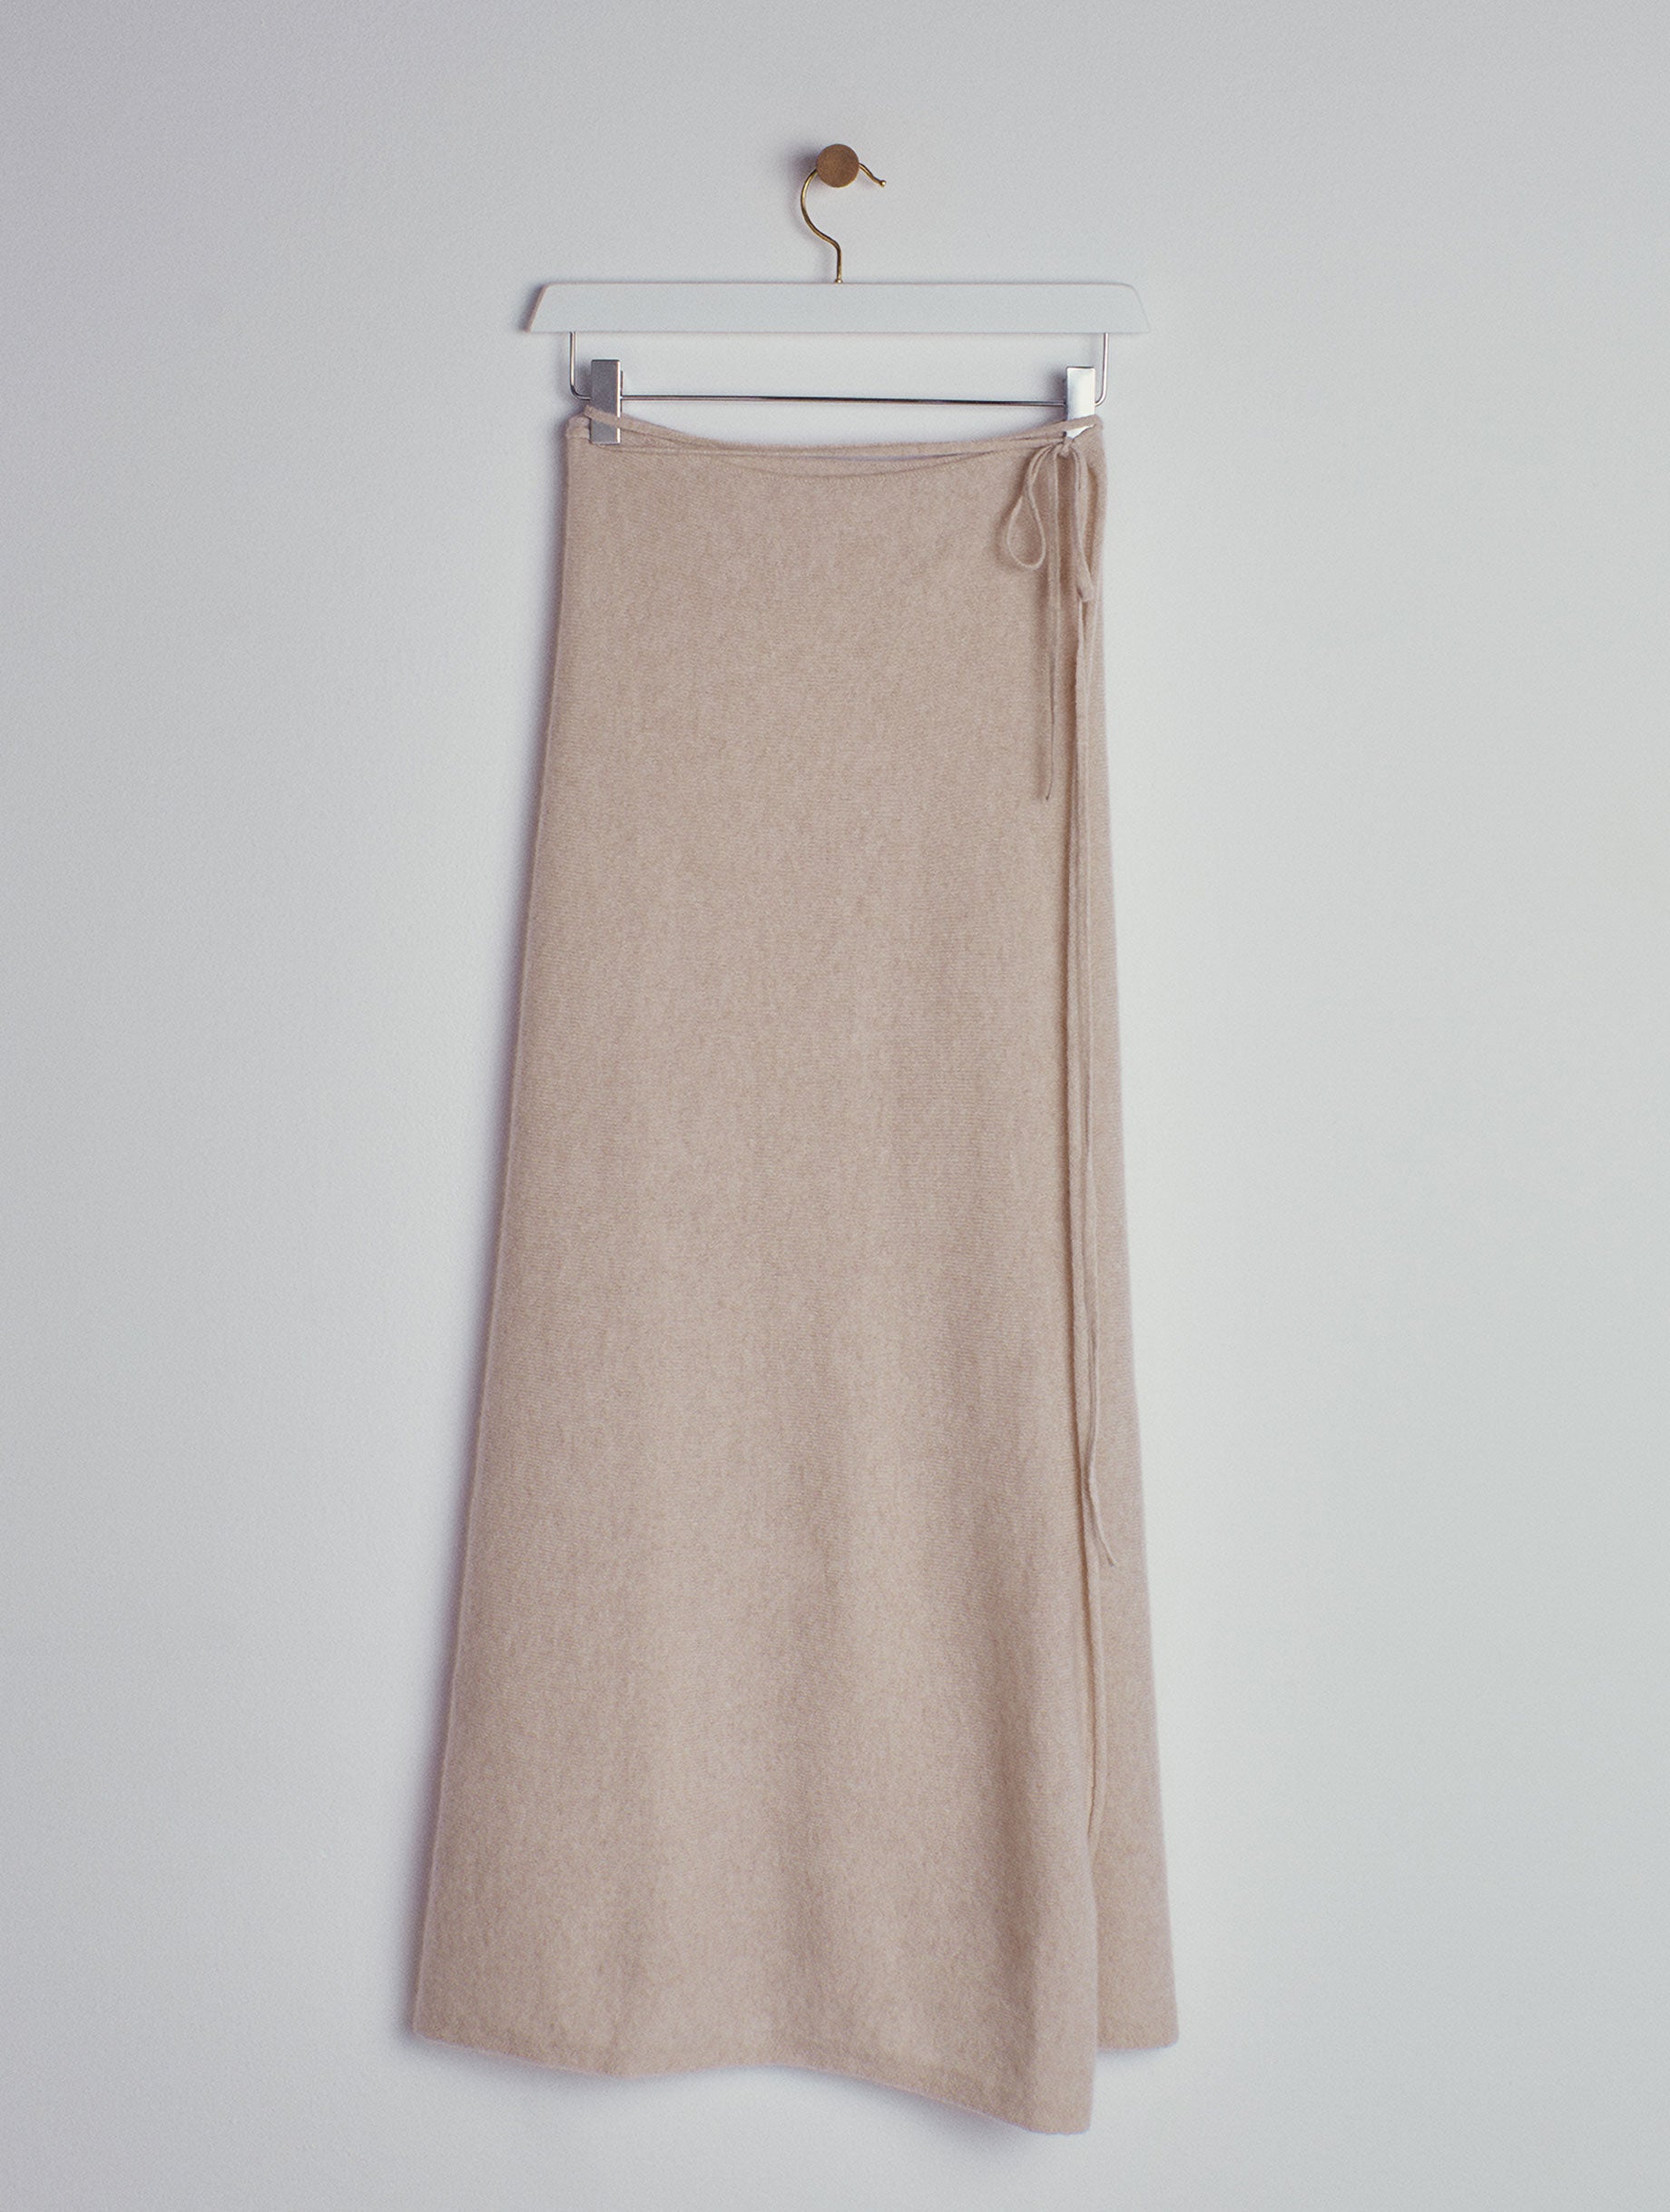 ESMERALDA Cashmere knitted wrap skirt ecru